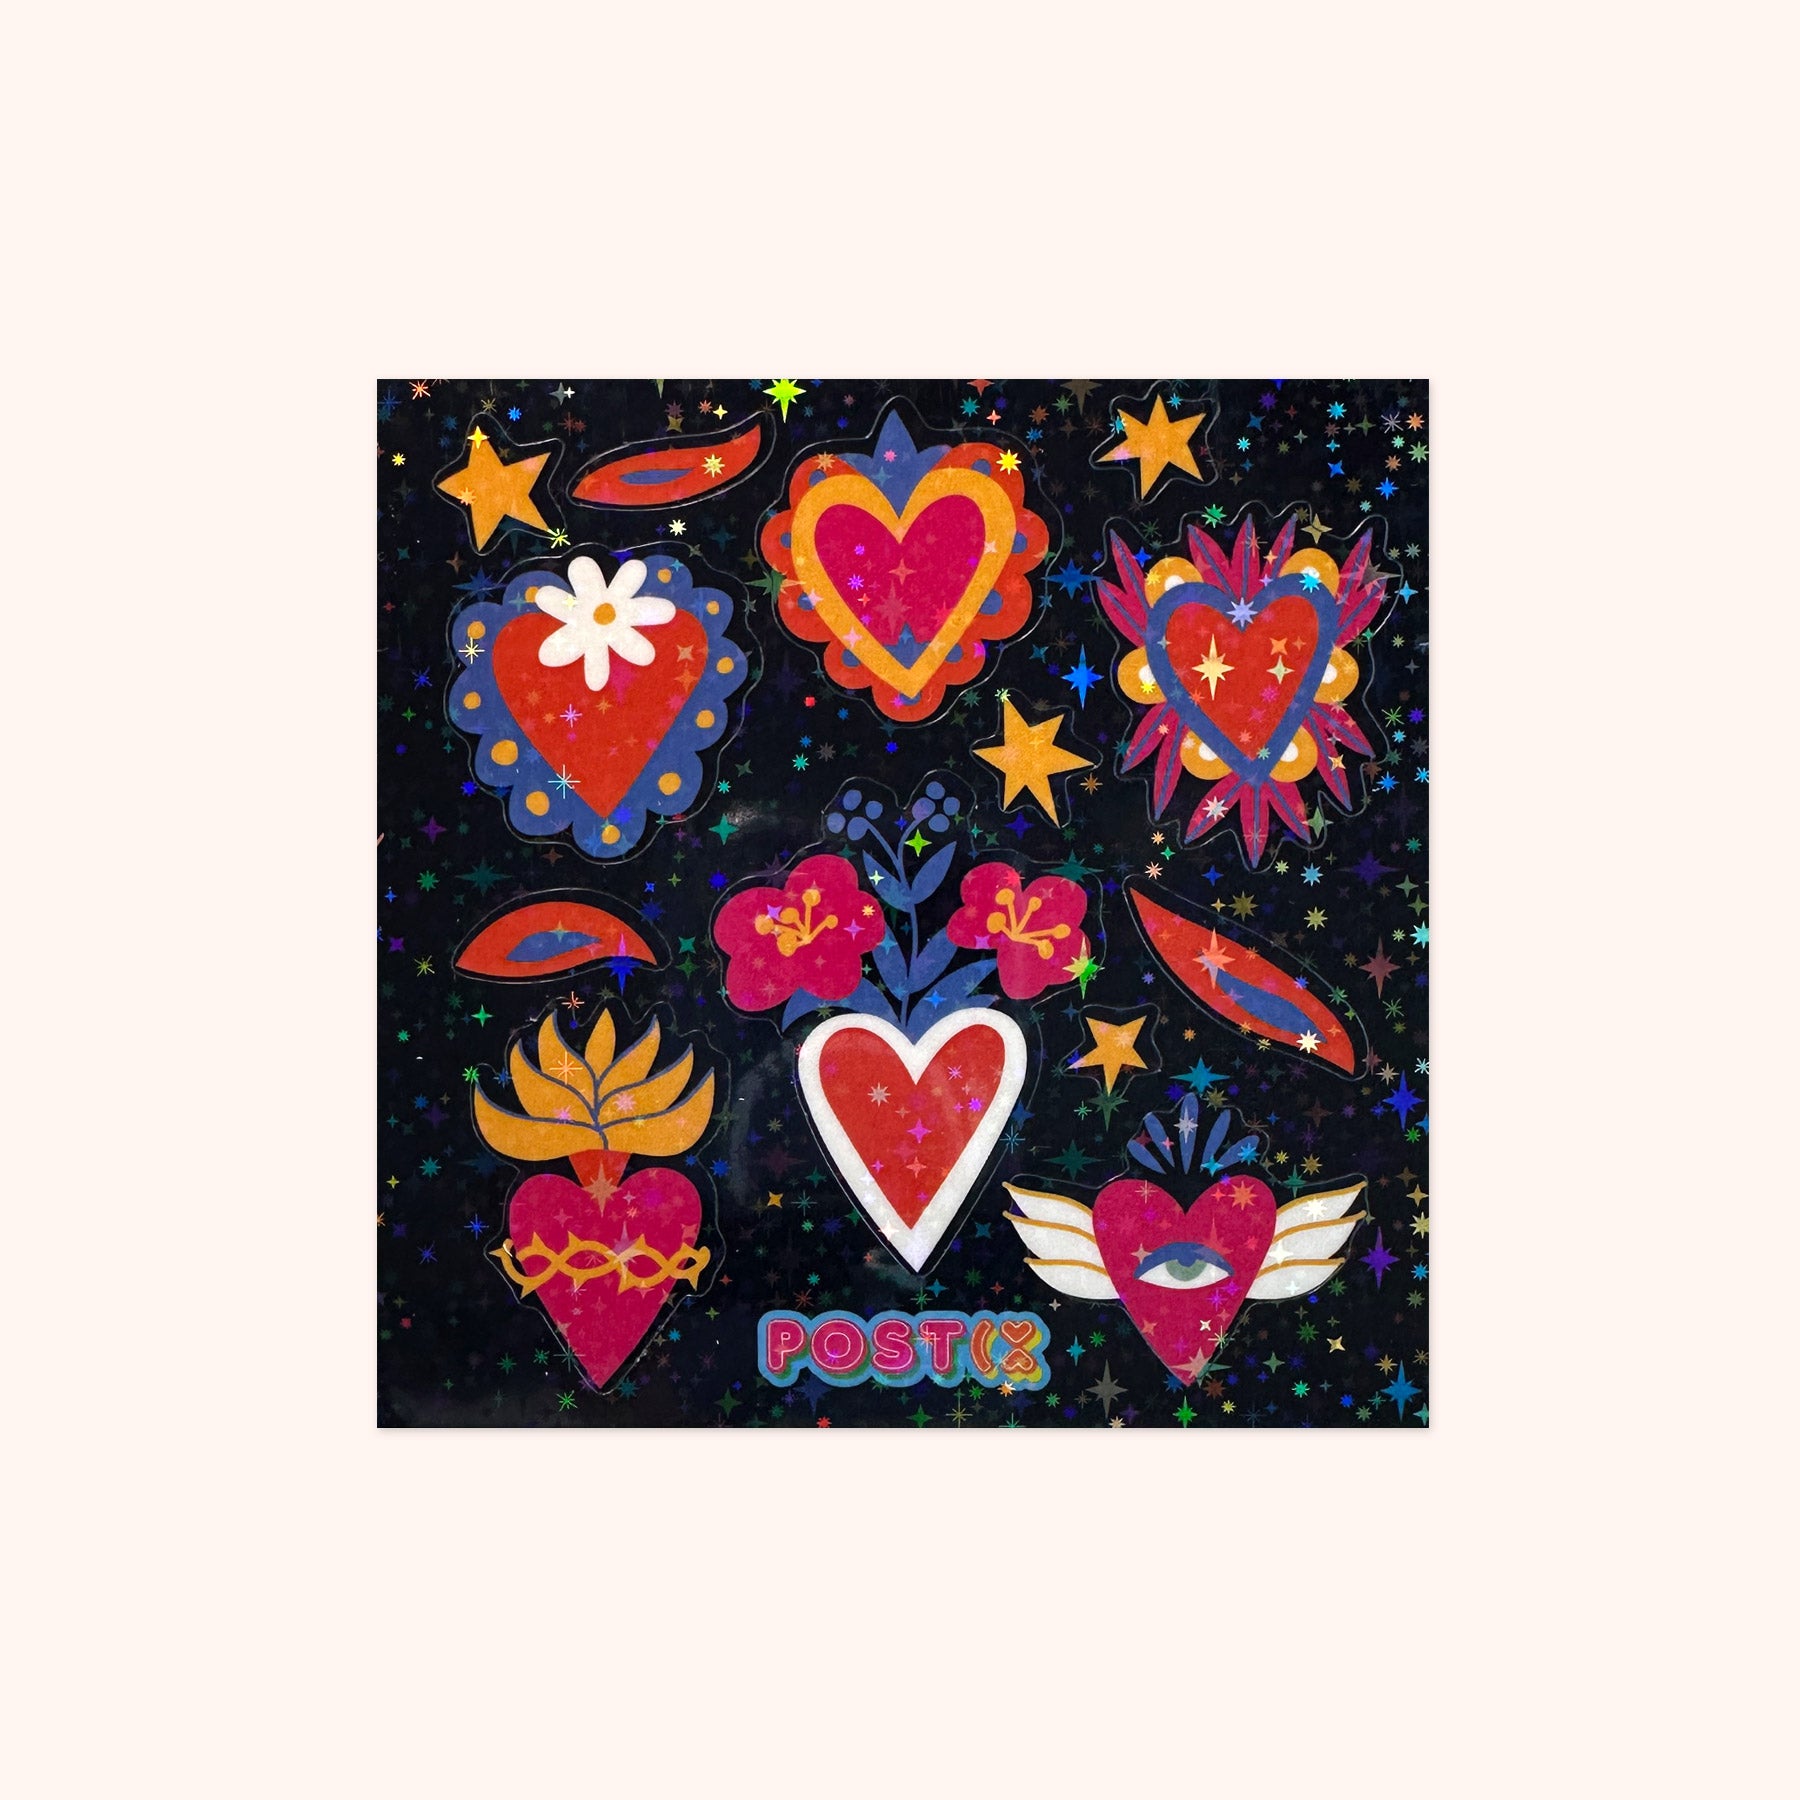 Kitschy Love Hearts Square Hologram Sticker Sheet